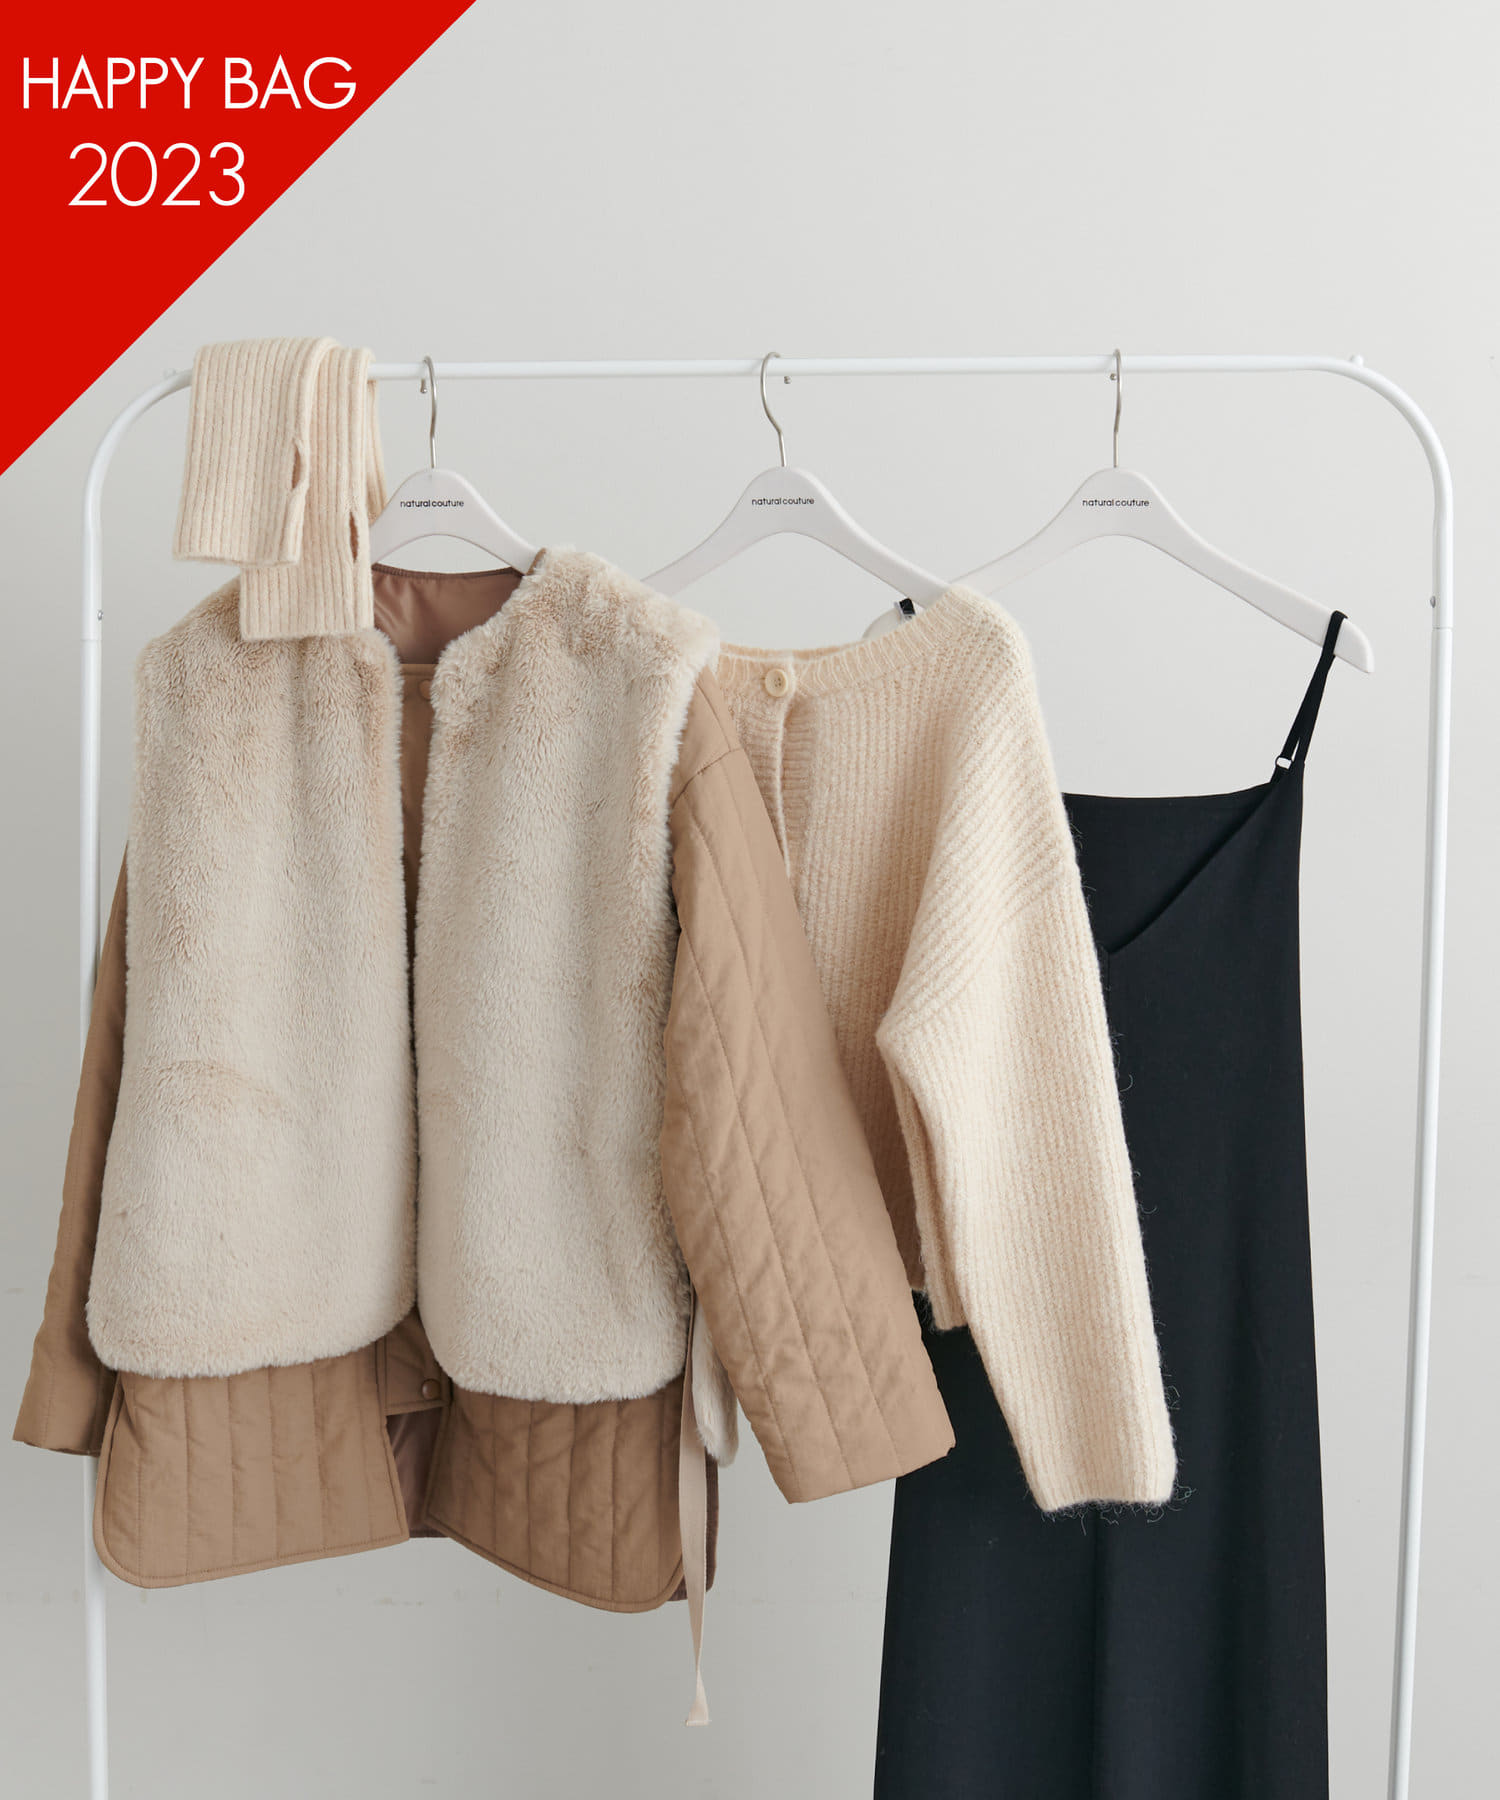 natural couture(ナチュラルクチュール) 【2023福袋】natural couture福袋